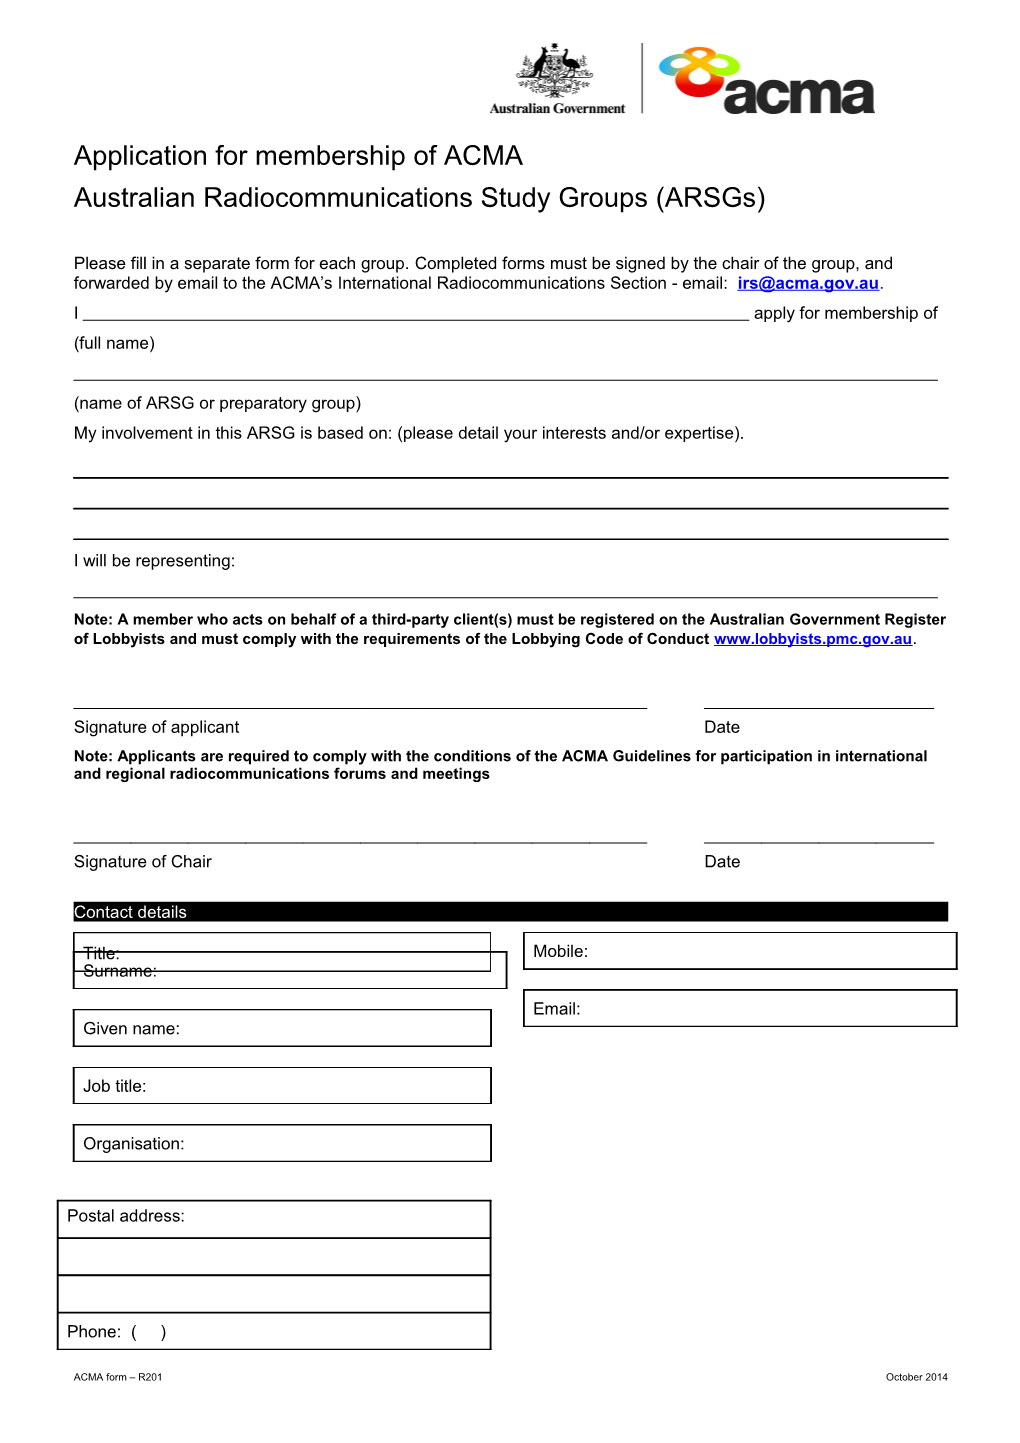 R201 - Application for Arsgs Membership